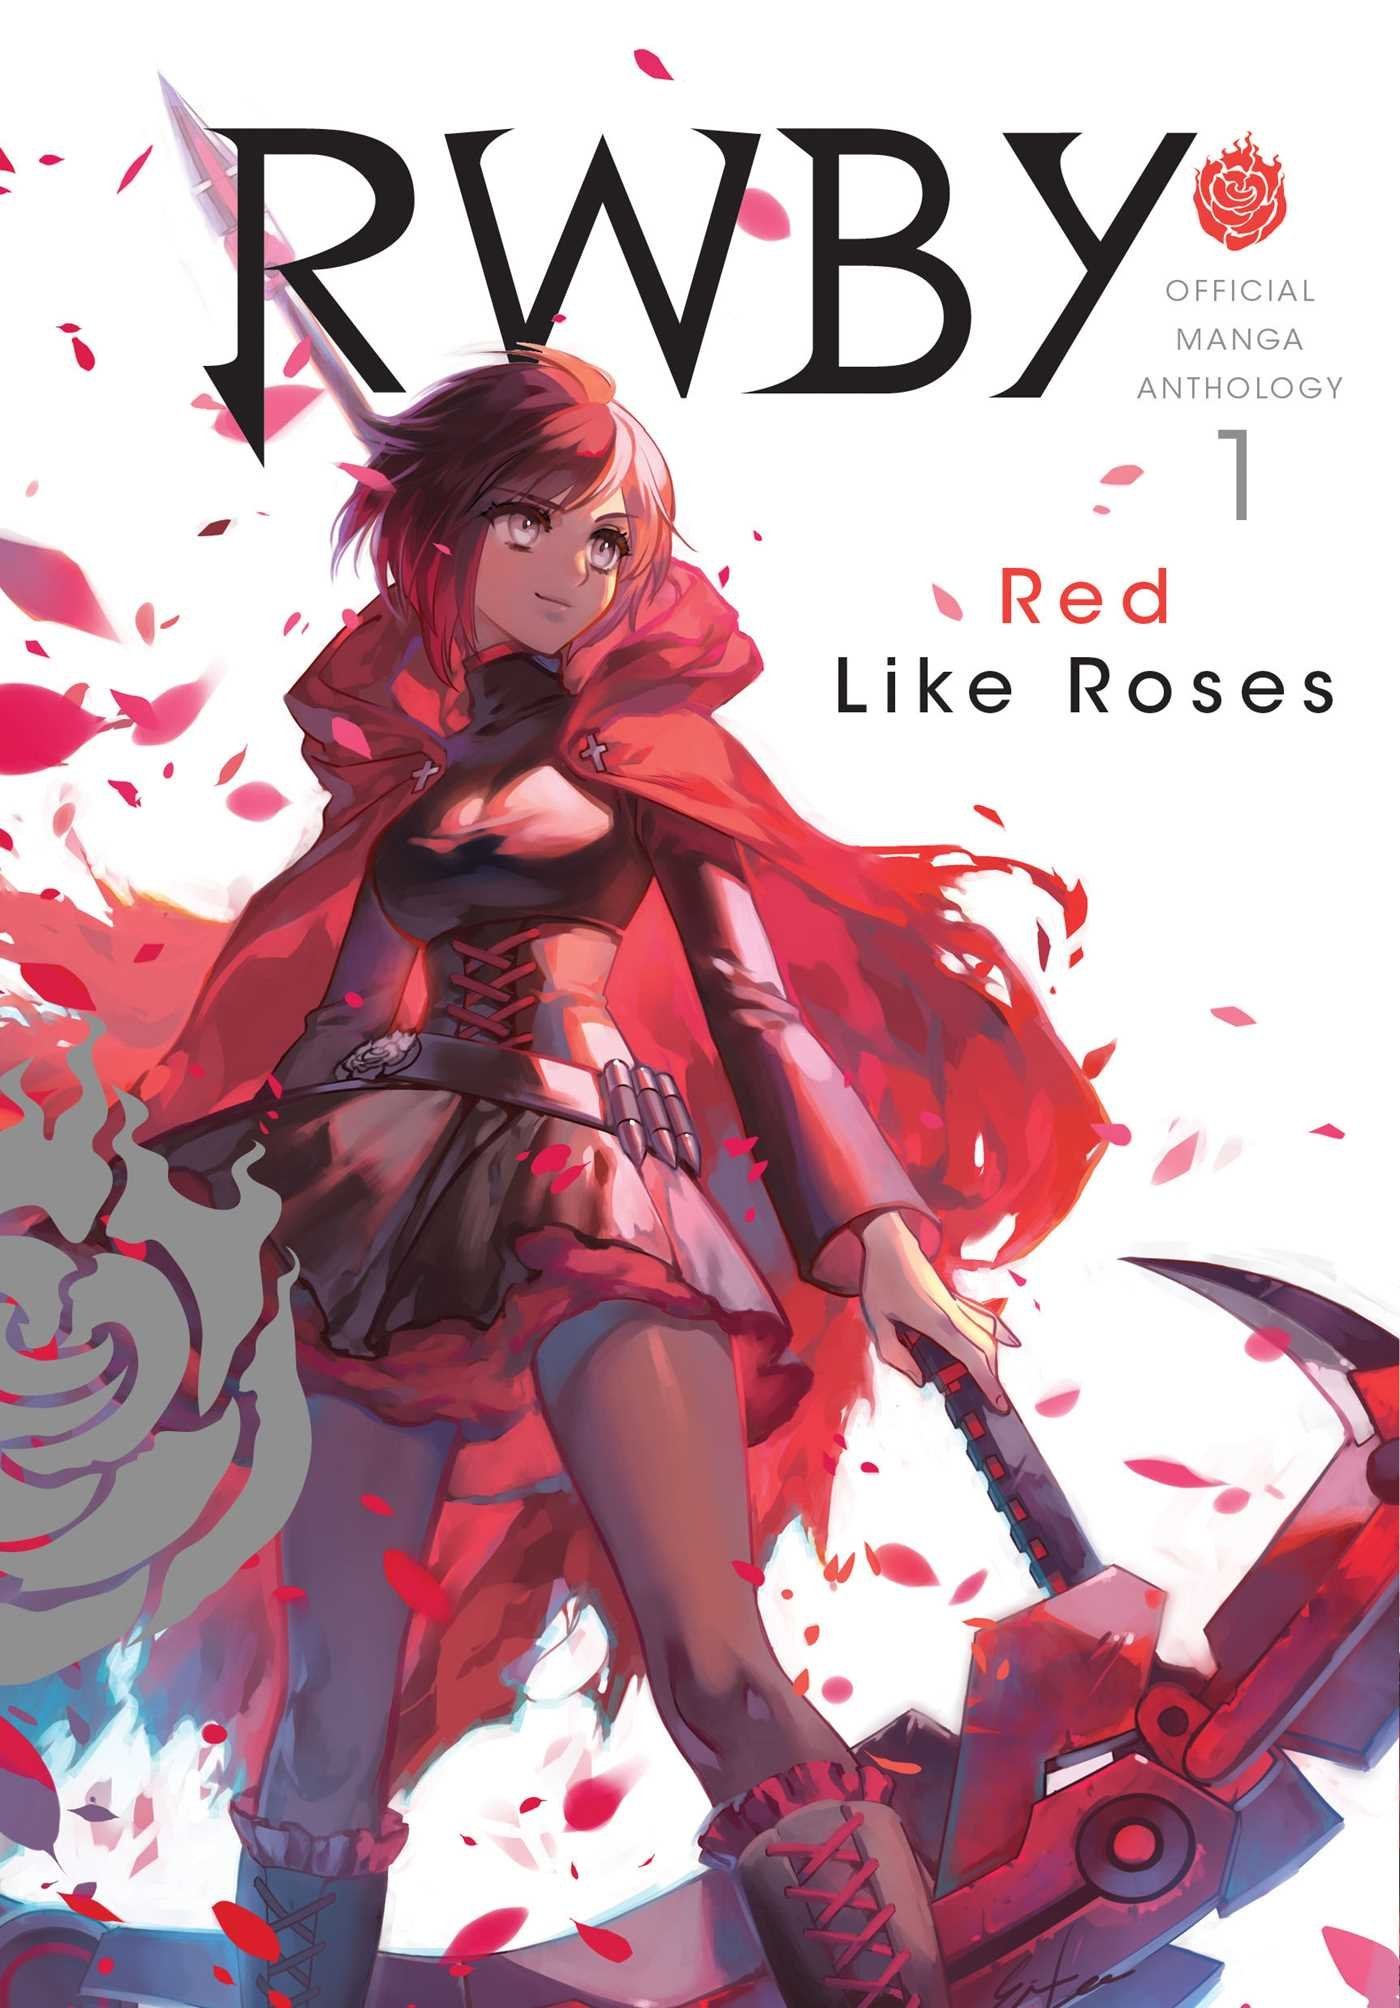 RWBY Official Manga Anthology Volume 1 Review  Anime UK News